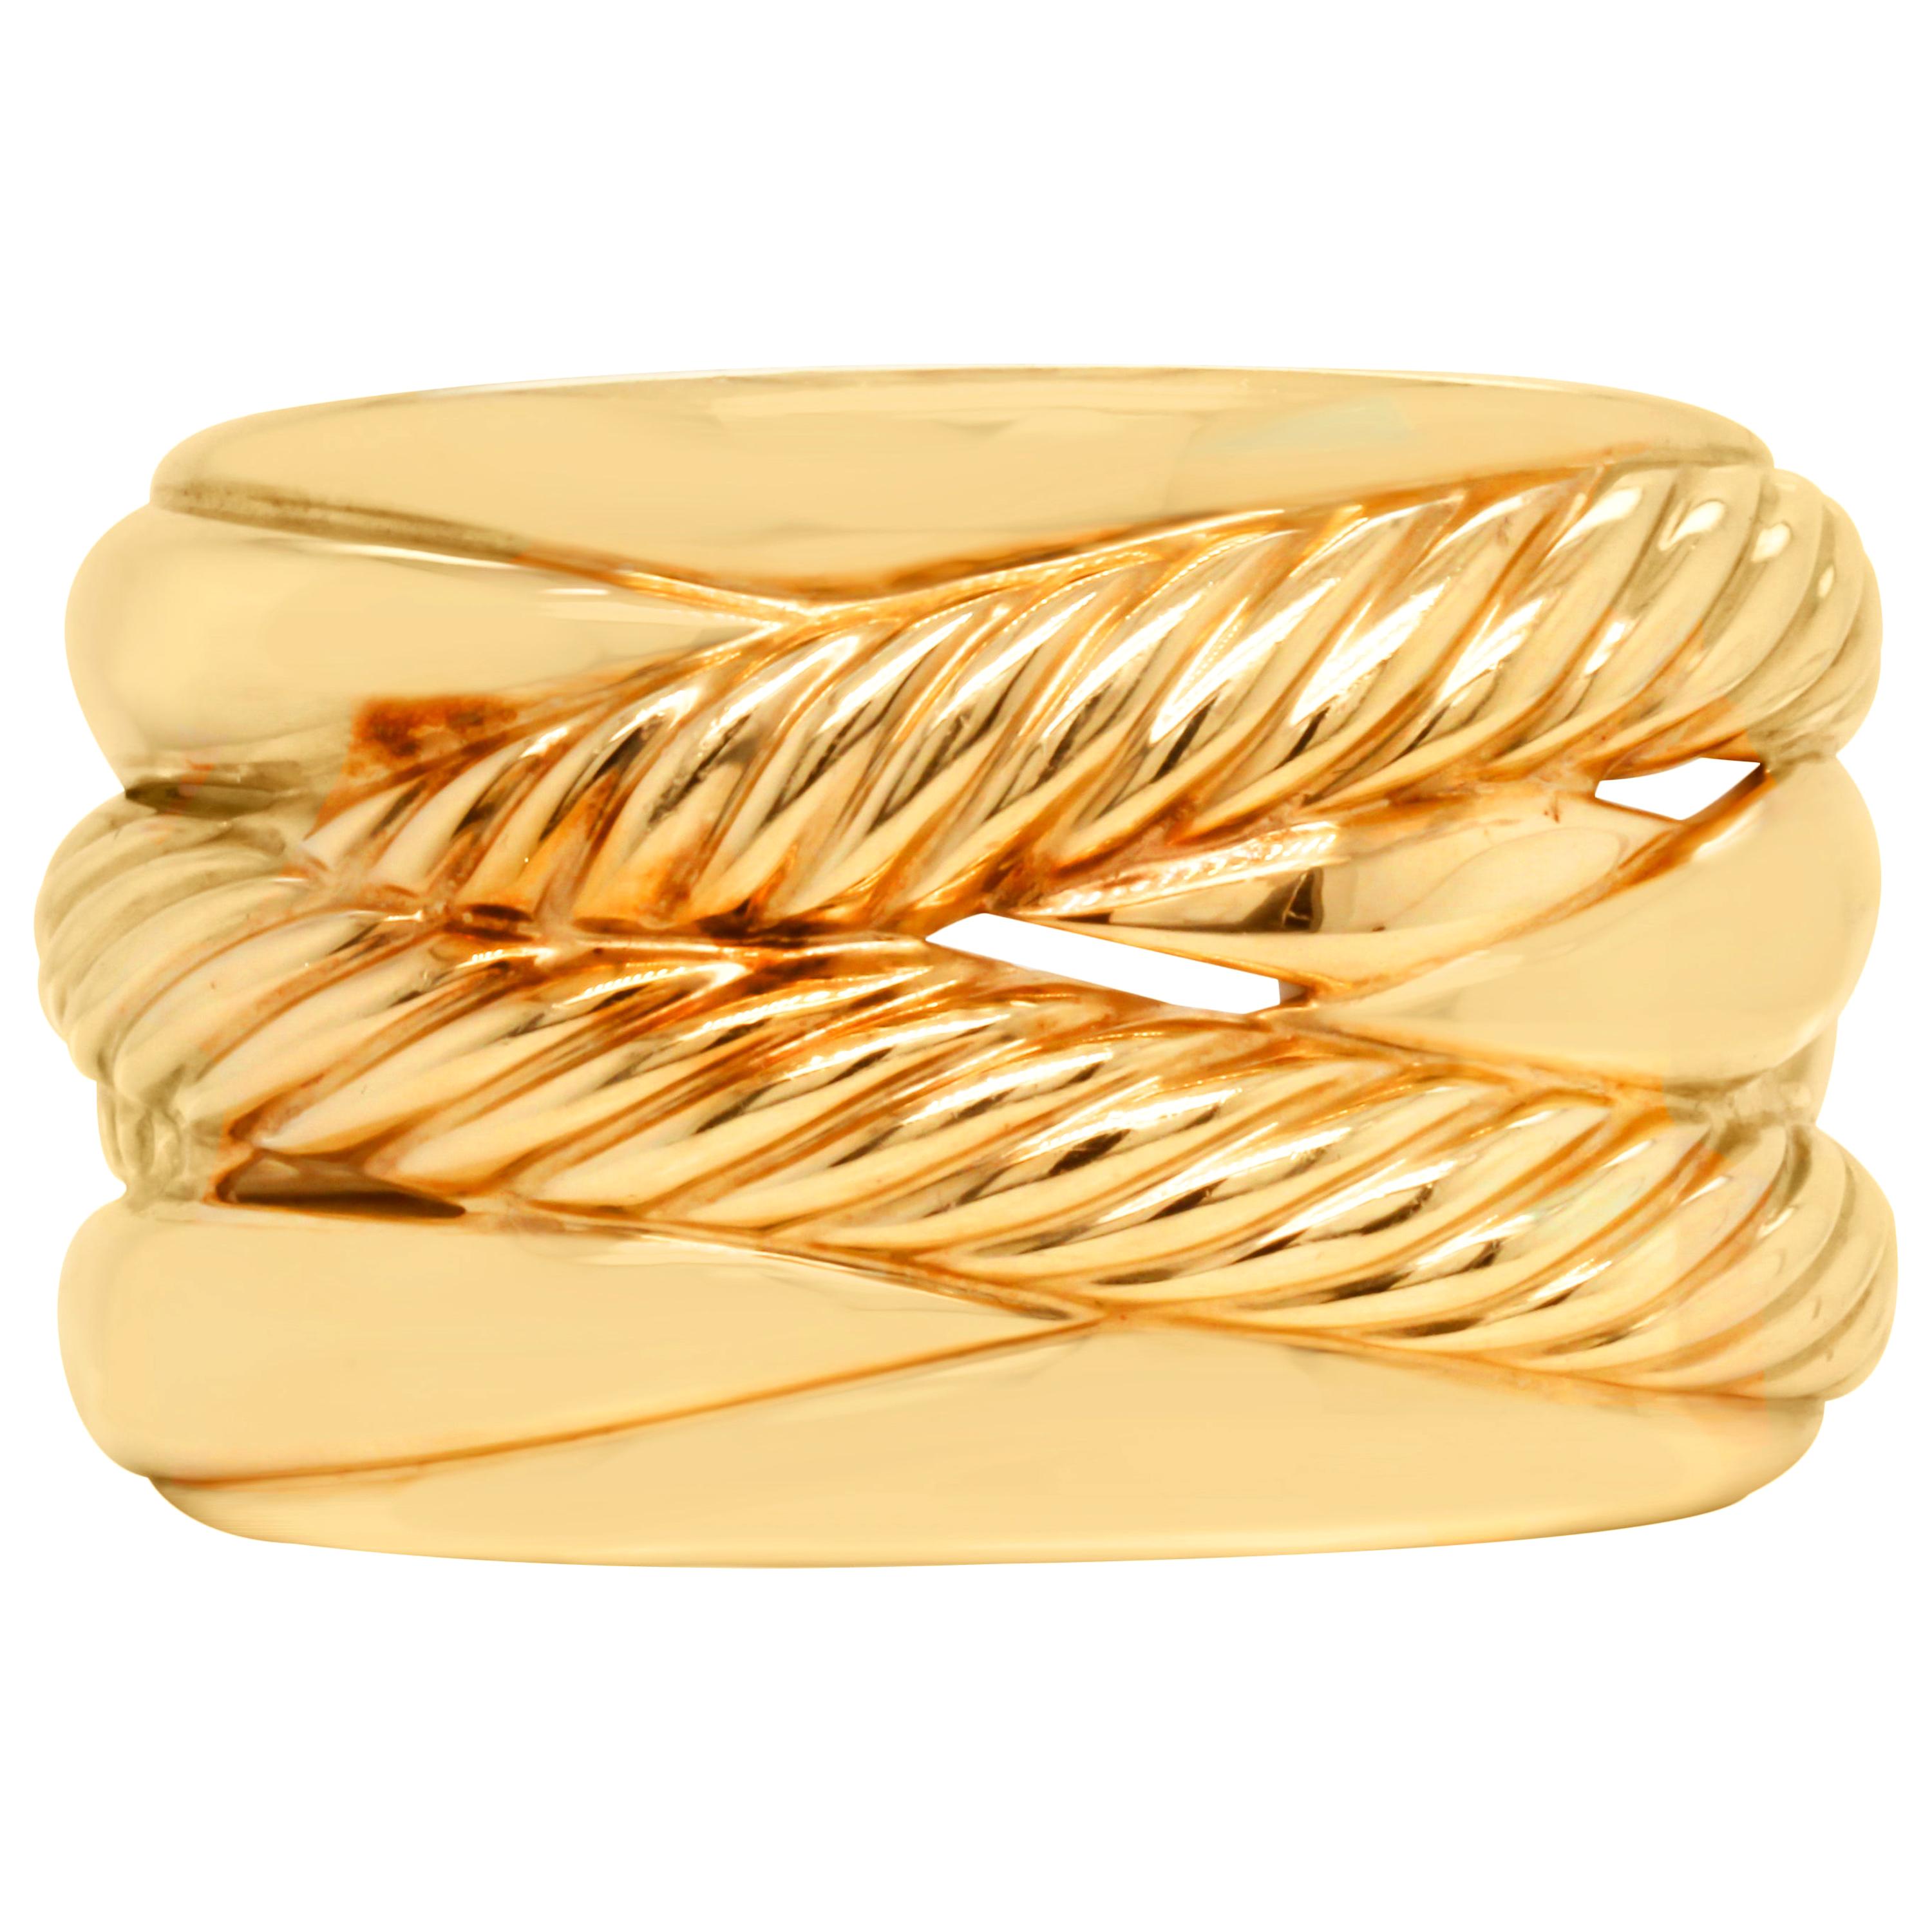 David Yurman Pure Form Collection 18 Karat Yellow Gold Wide Cuff Bangle Bracelet For Sale